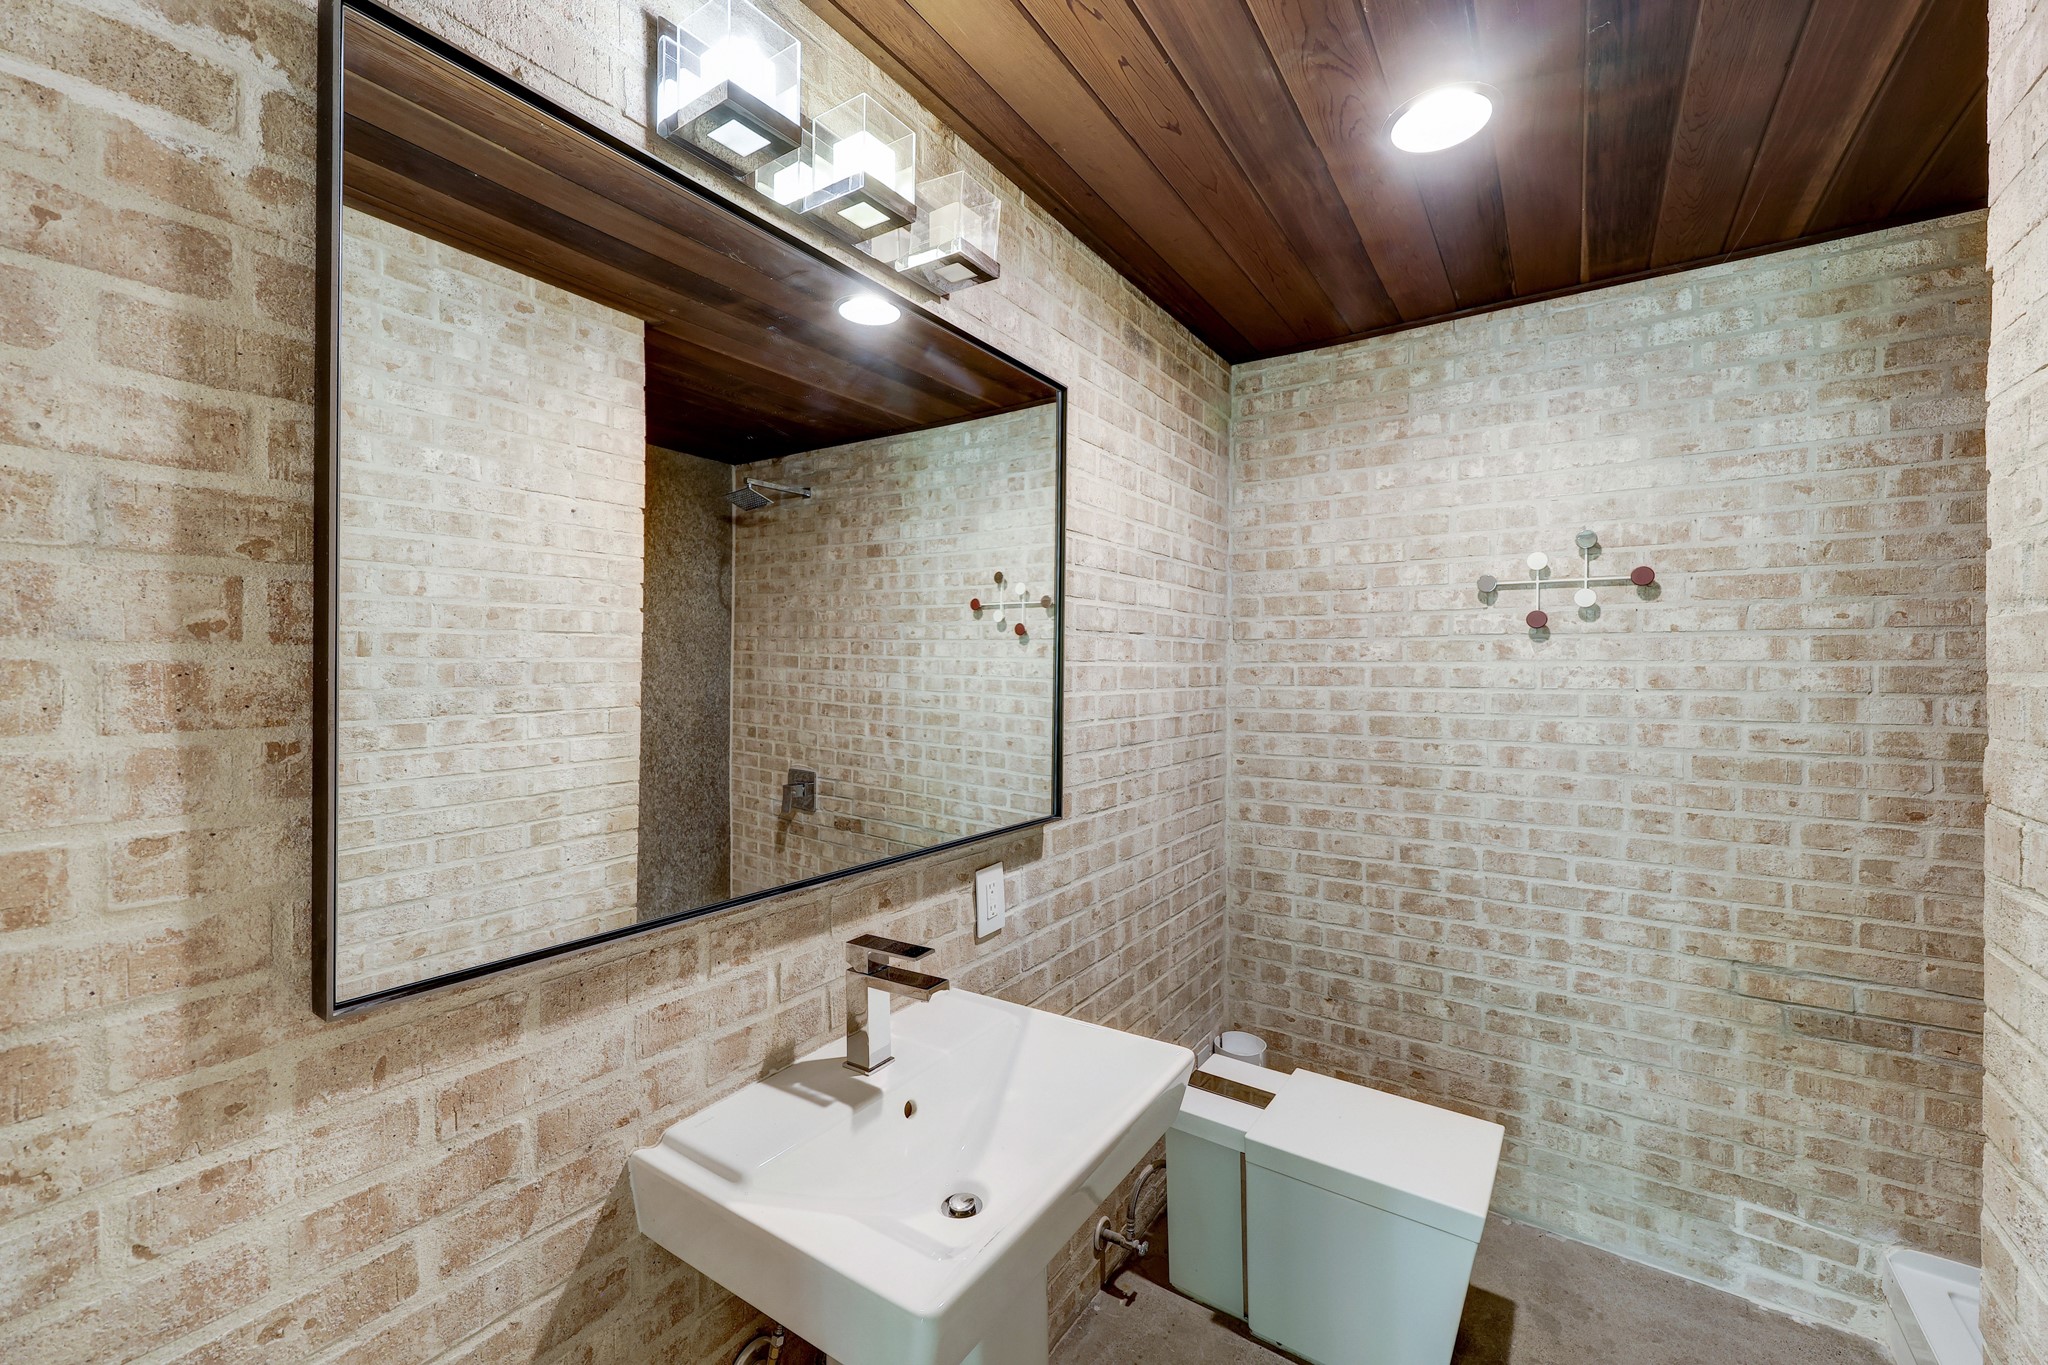 [Third-Floor Full Bath]
The third-floor bath includes an open-entry shower.